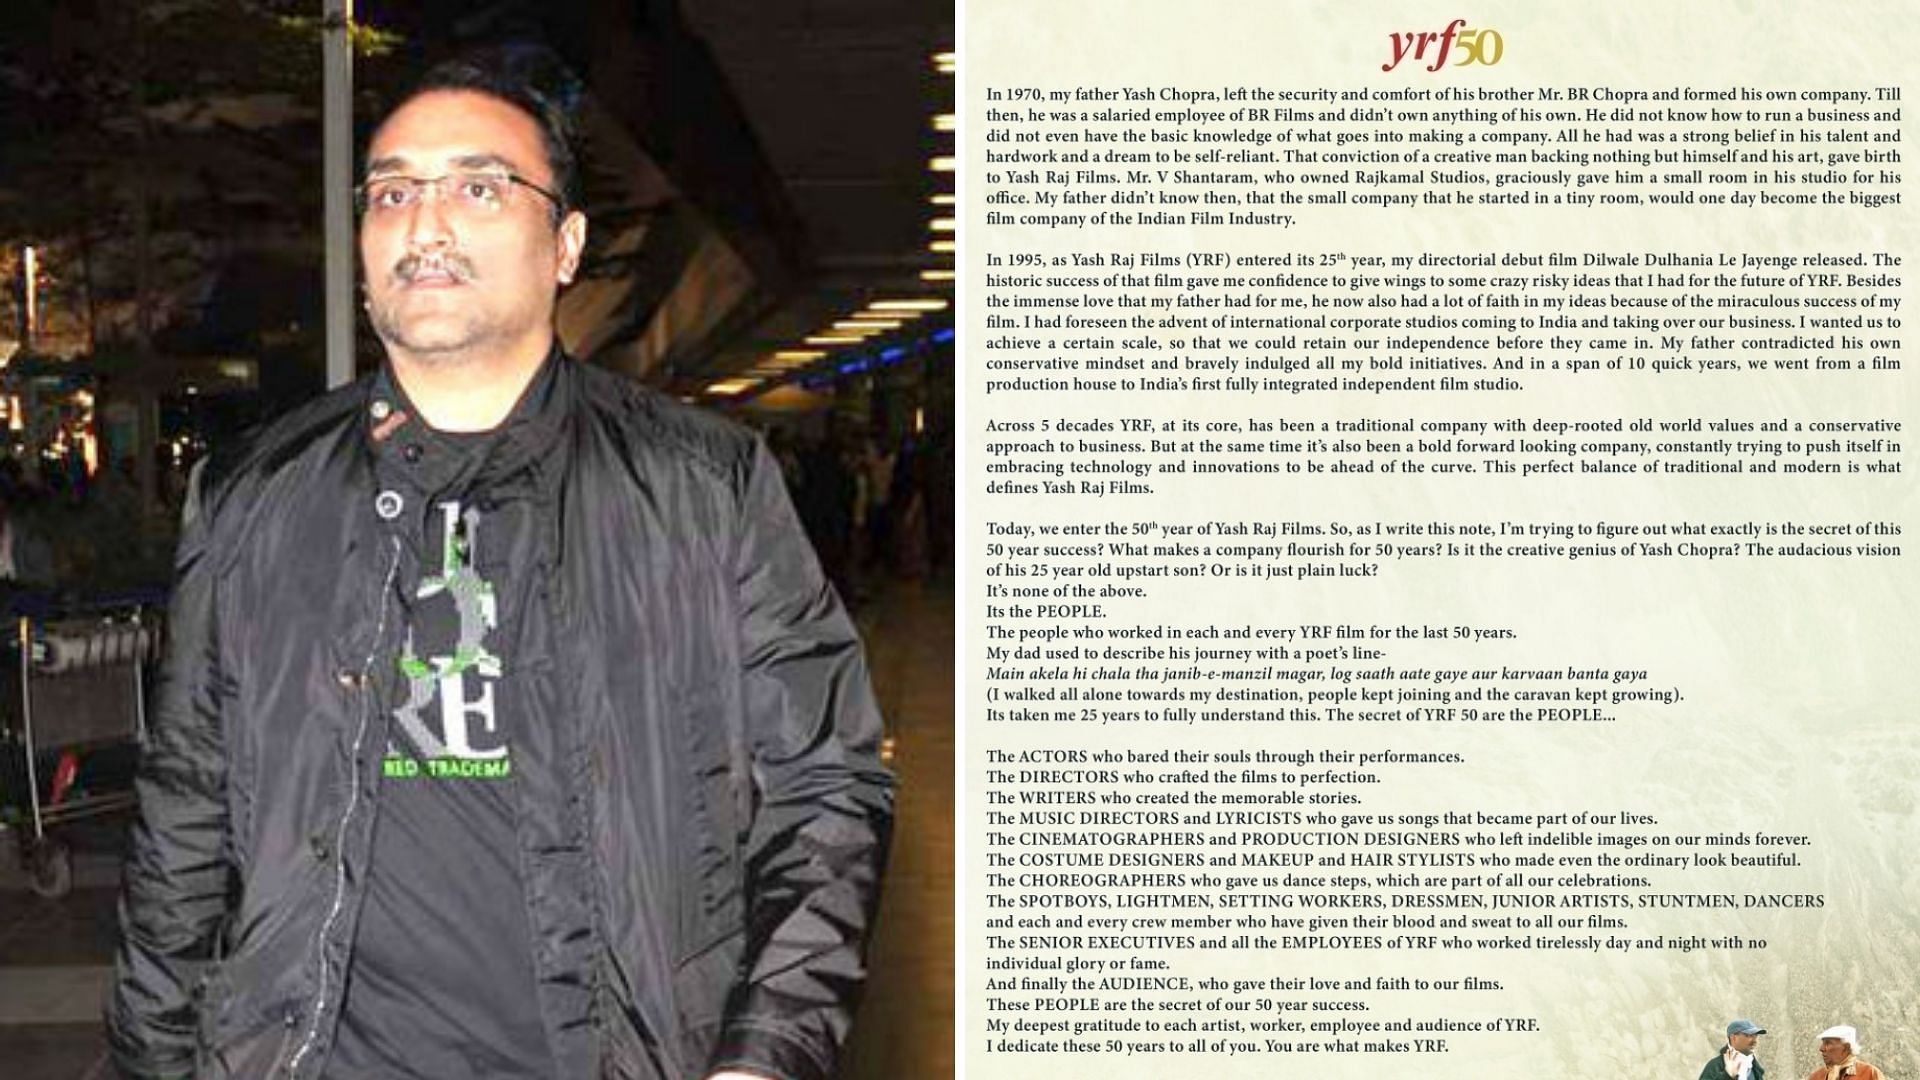 Aditya Chopra pens a long note as Yash Raj Films completes 50 years.